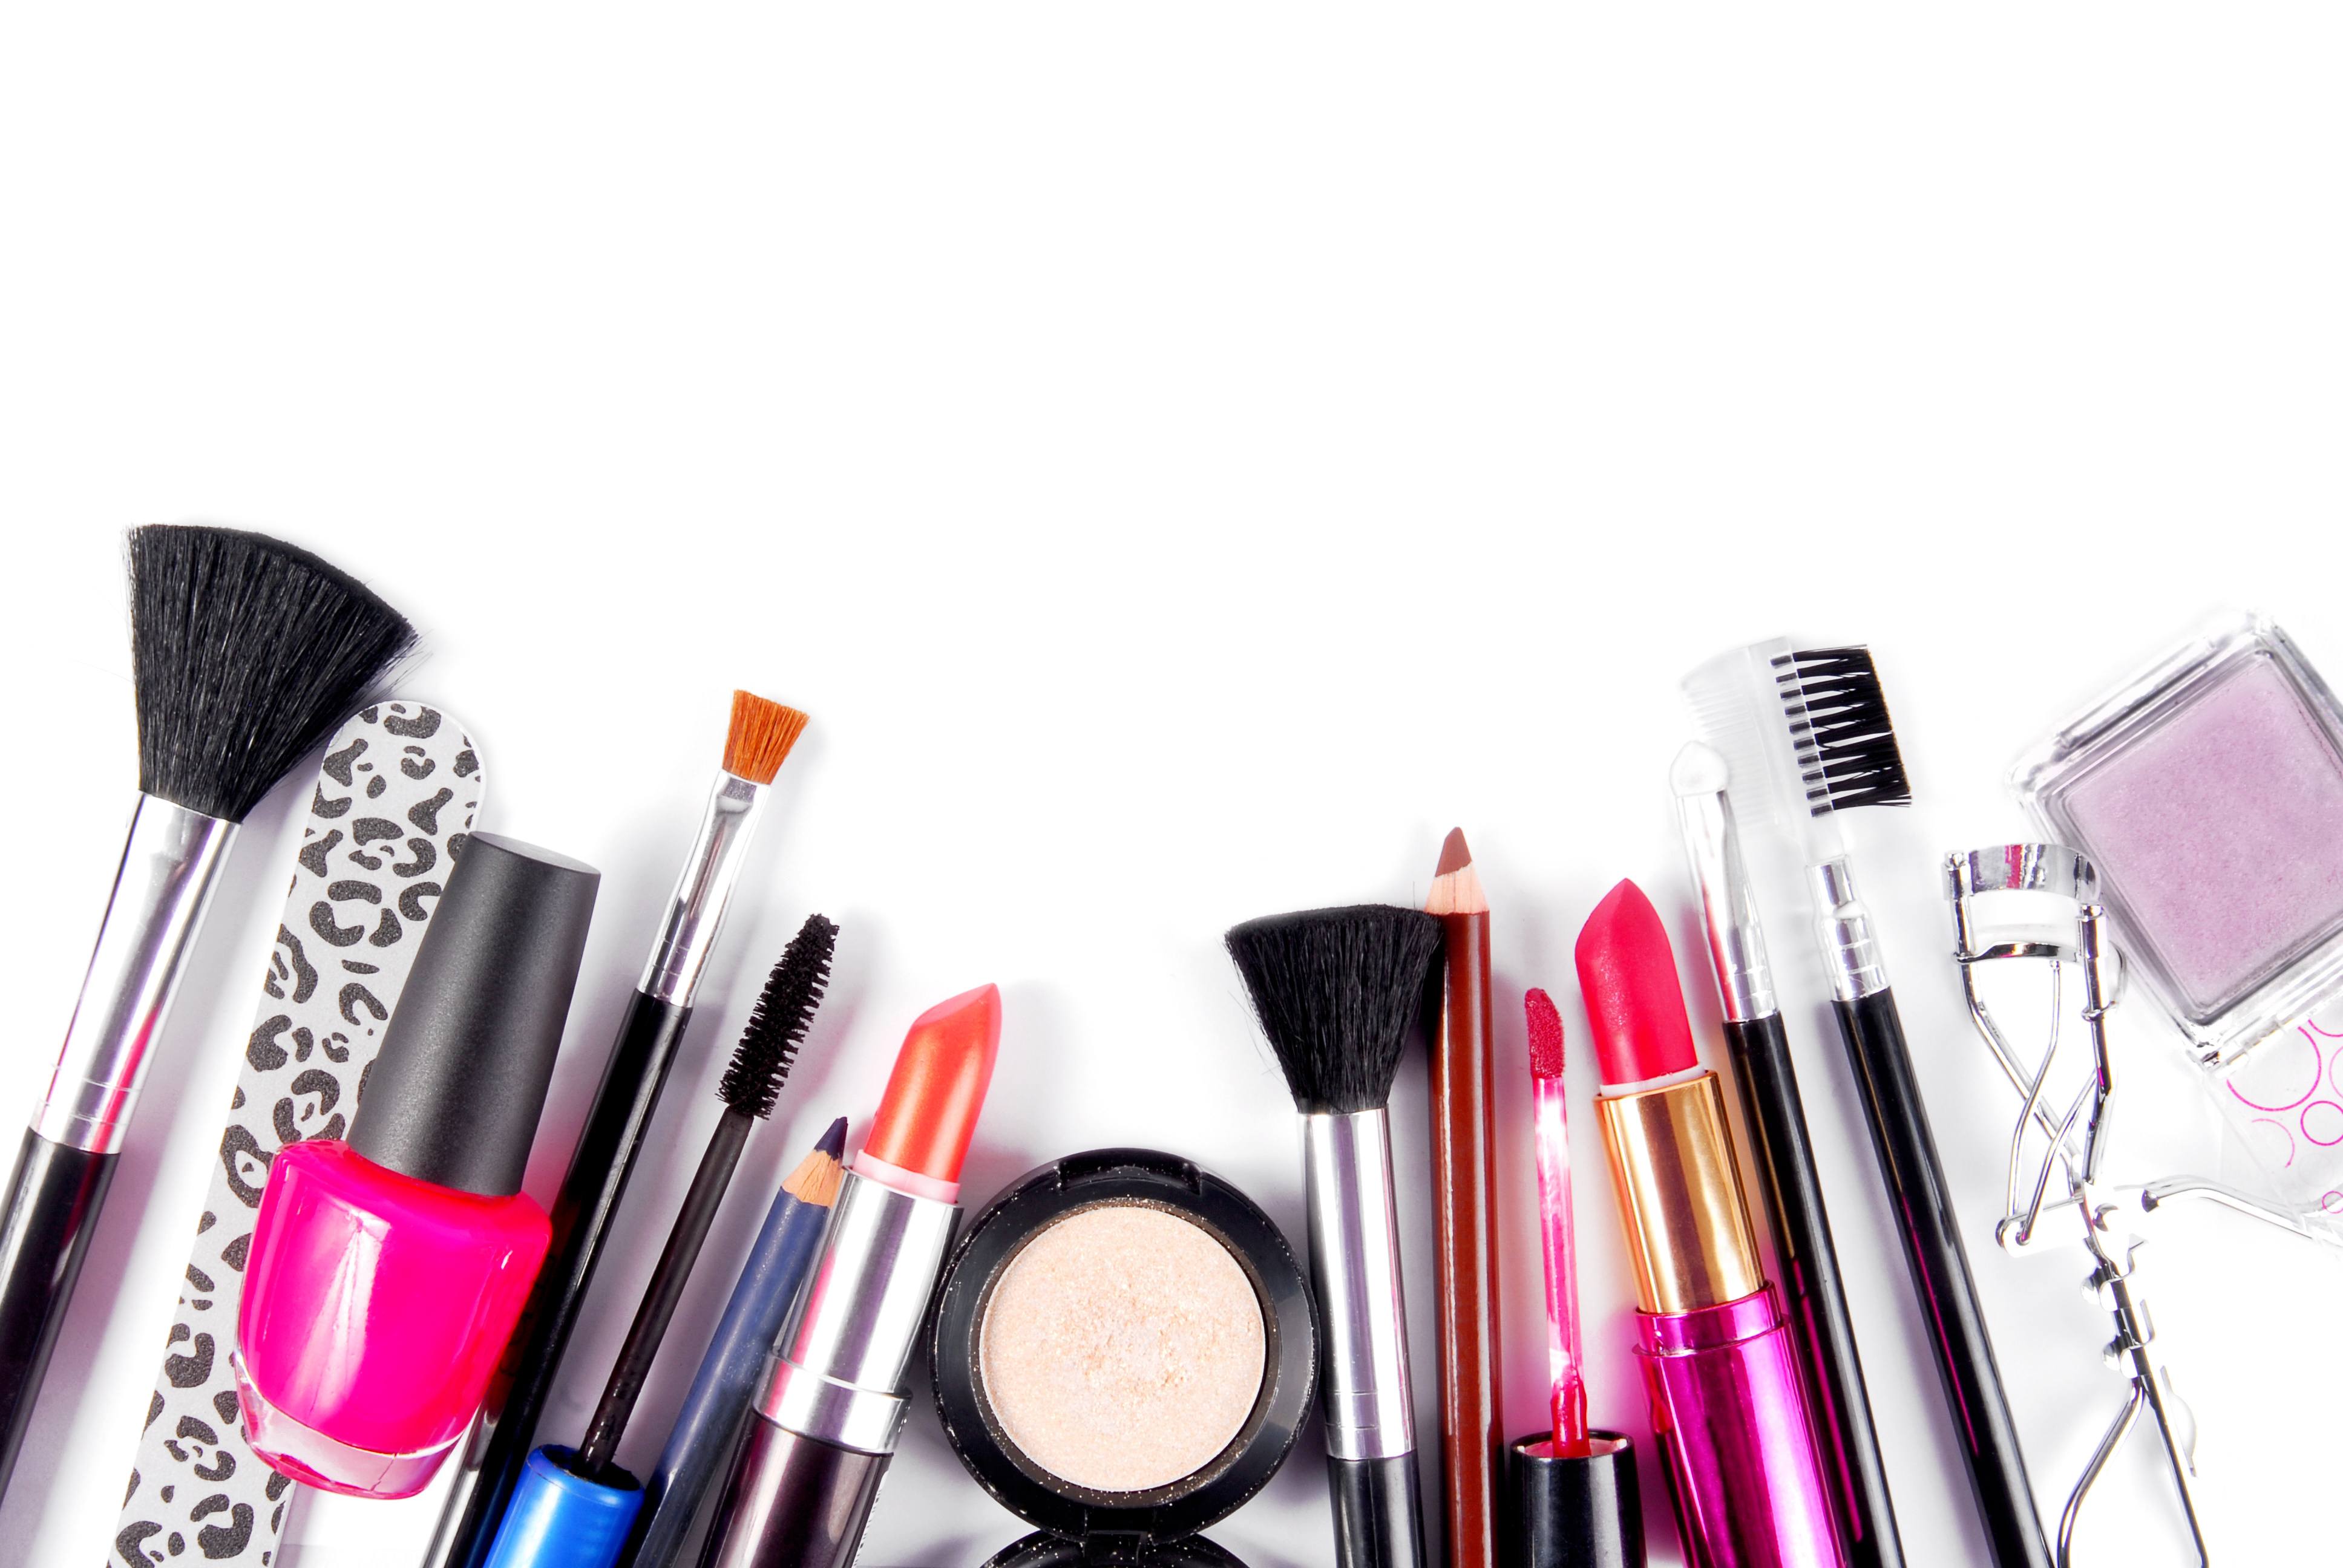 cosmetics wallpaper,product,cosmetics,beauty,pink,makeup brushes